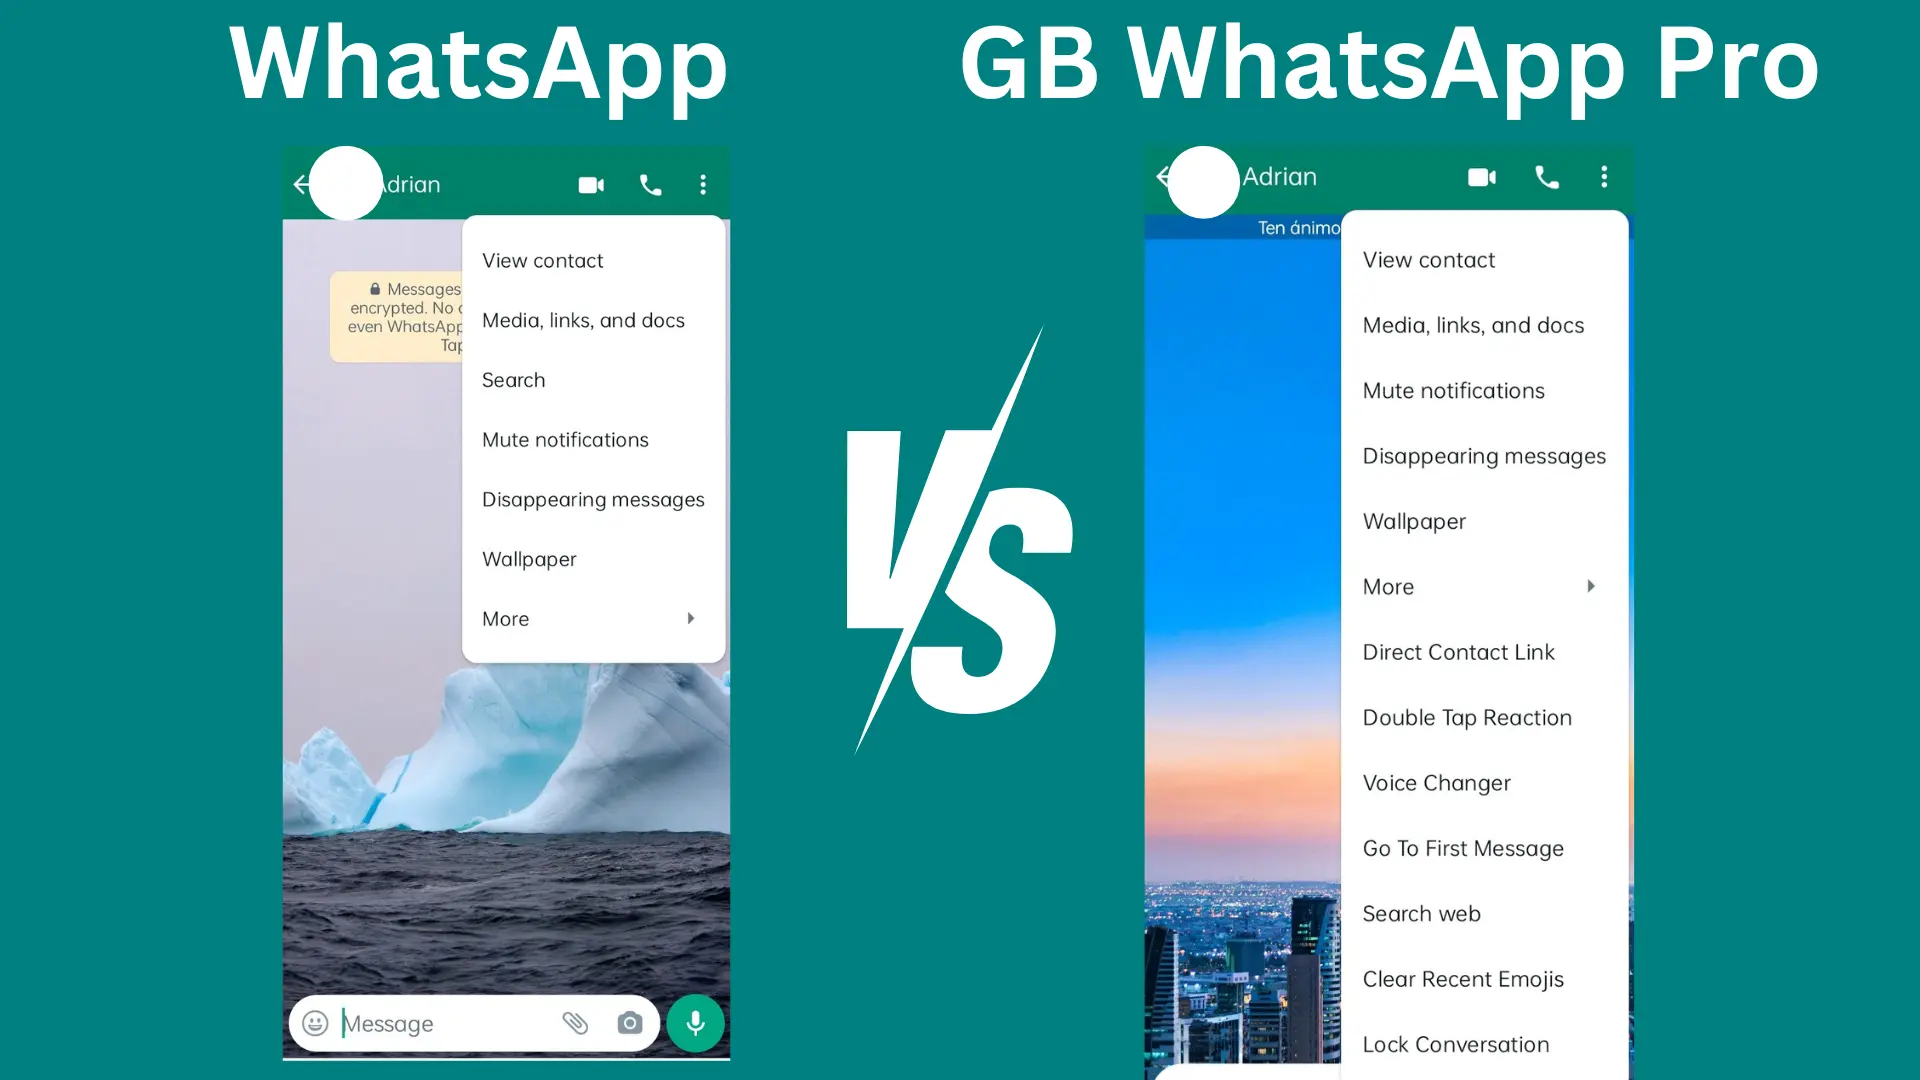  gbwhatsapp pro apk download vs whatsapp comparison image